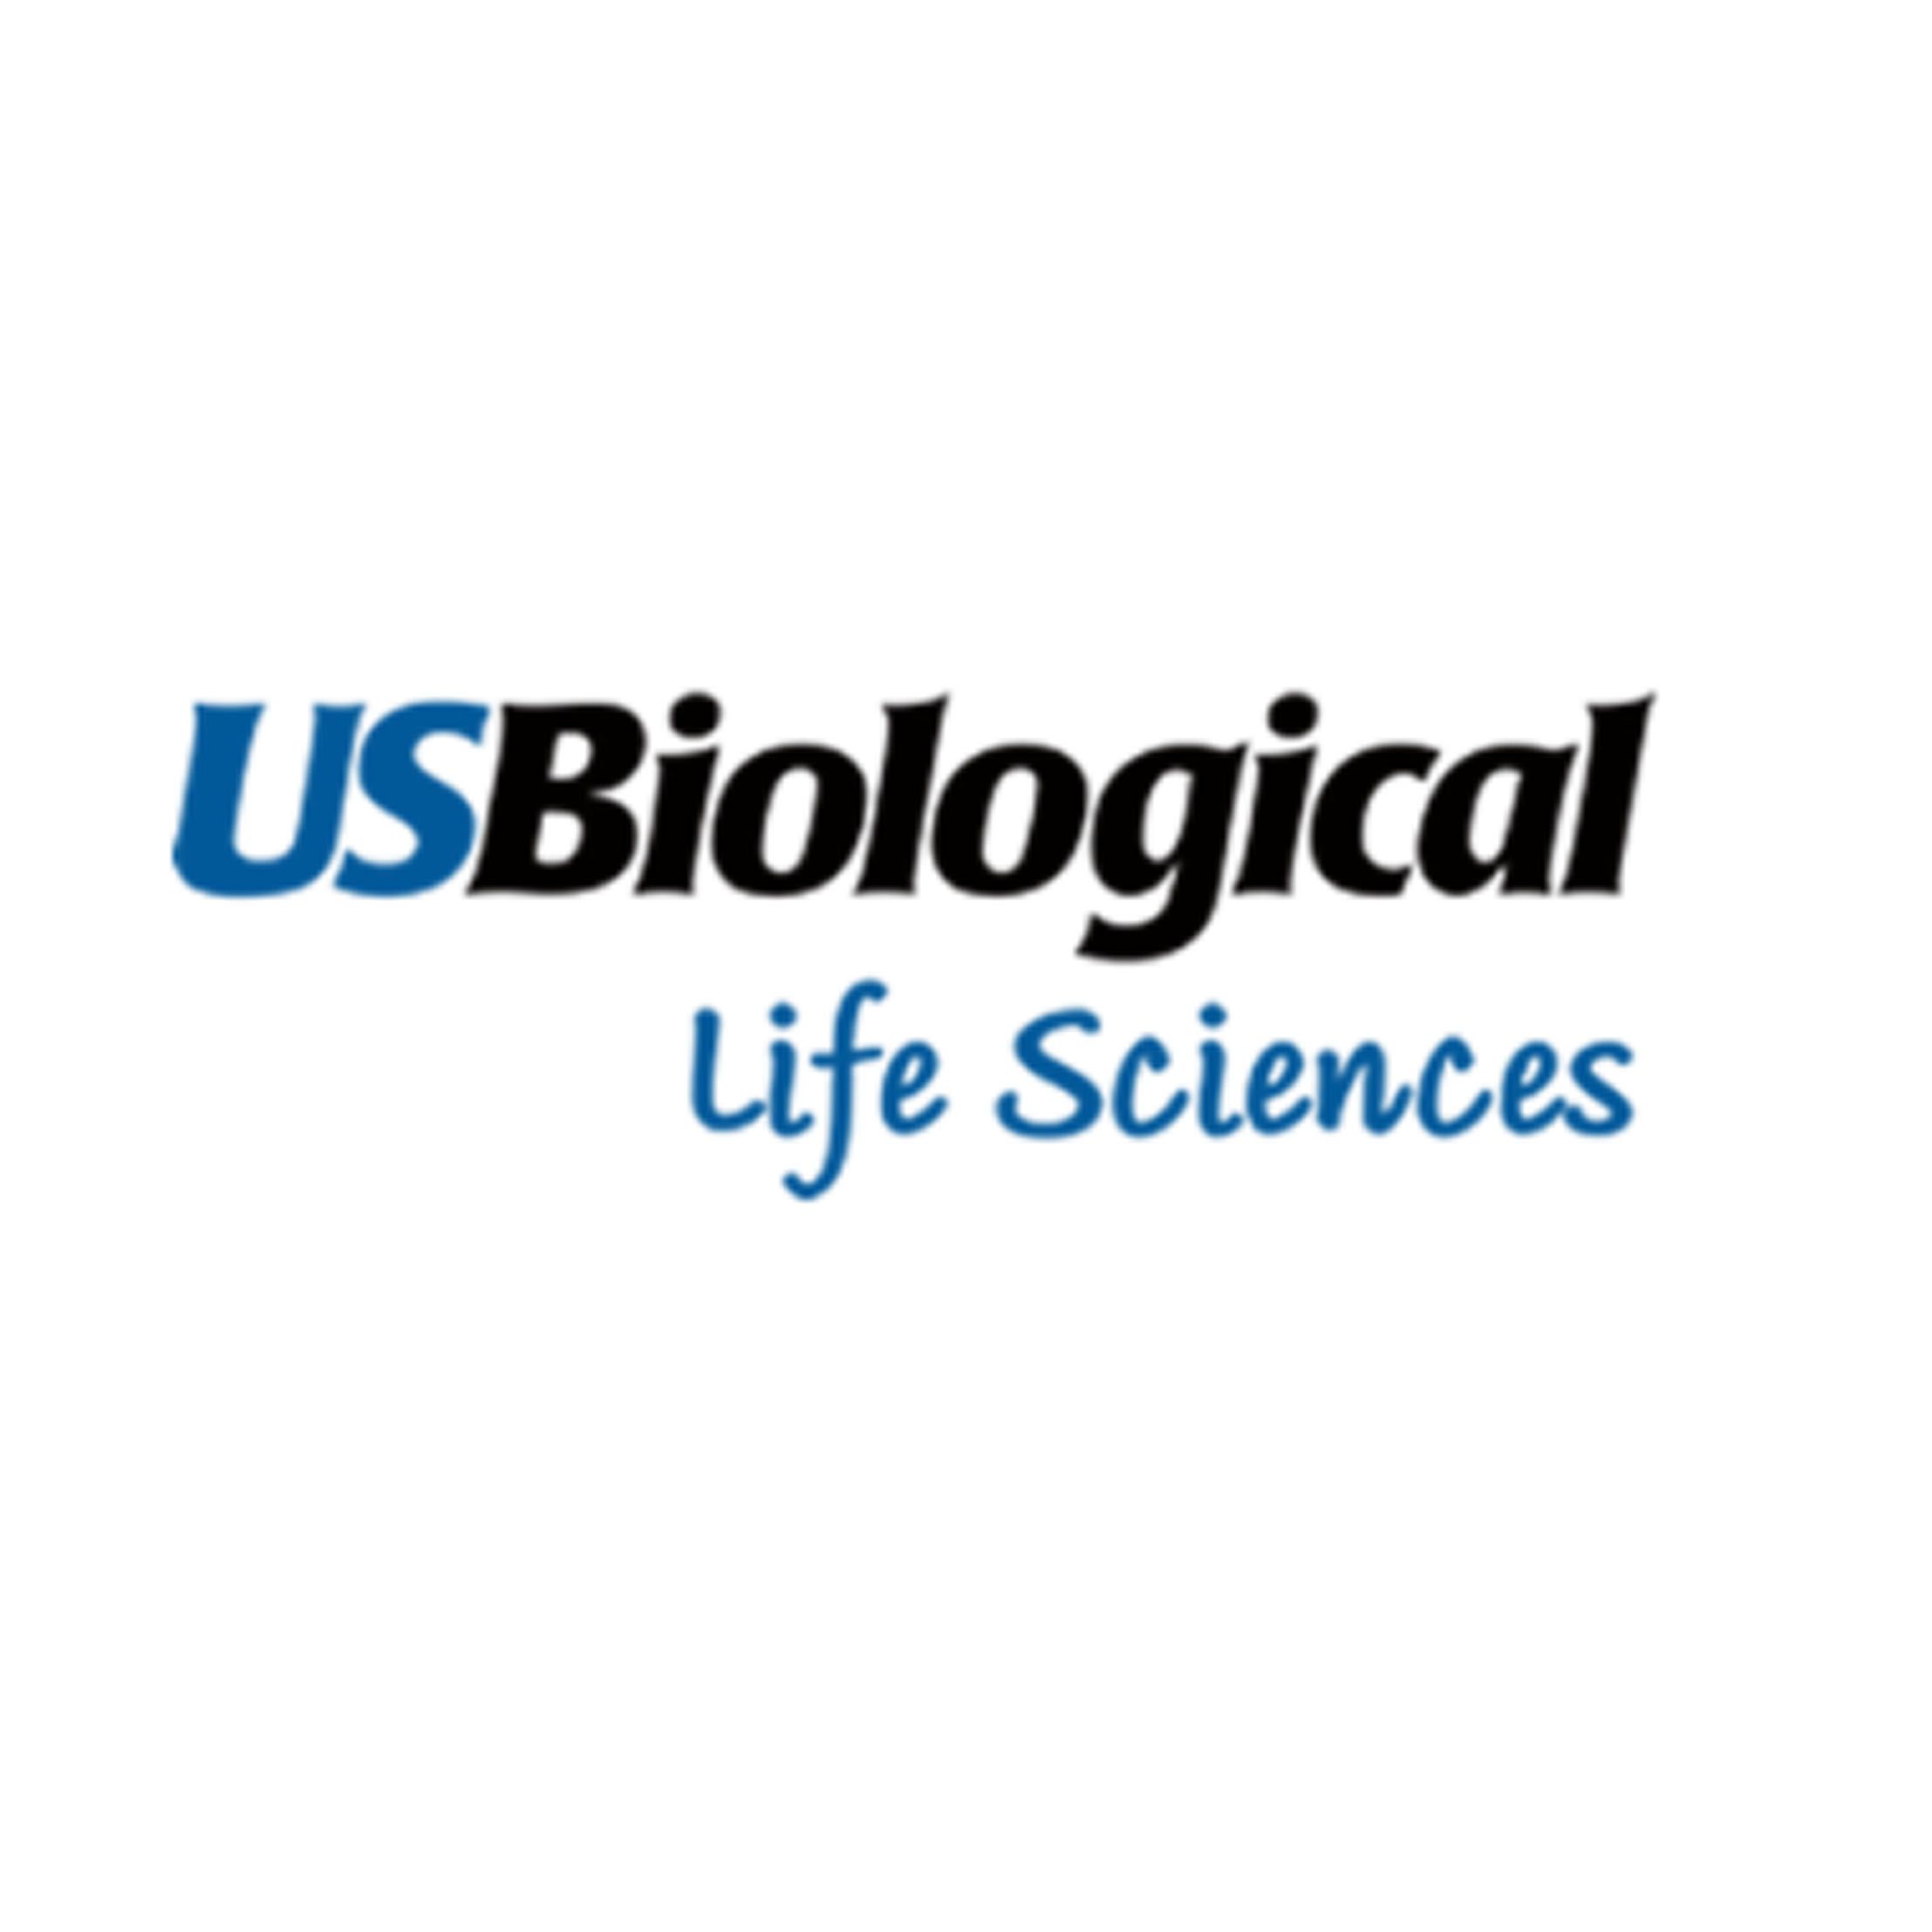 USBiological抗体、生化试剂、基因克隆相关产品、培养基、生长因子等细胞因子、分子生物学试剂,现货